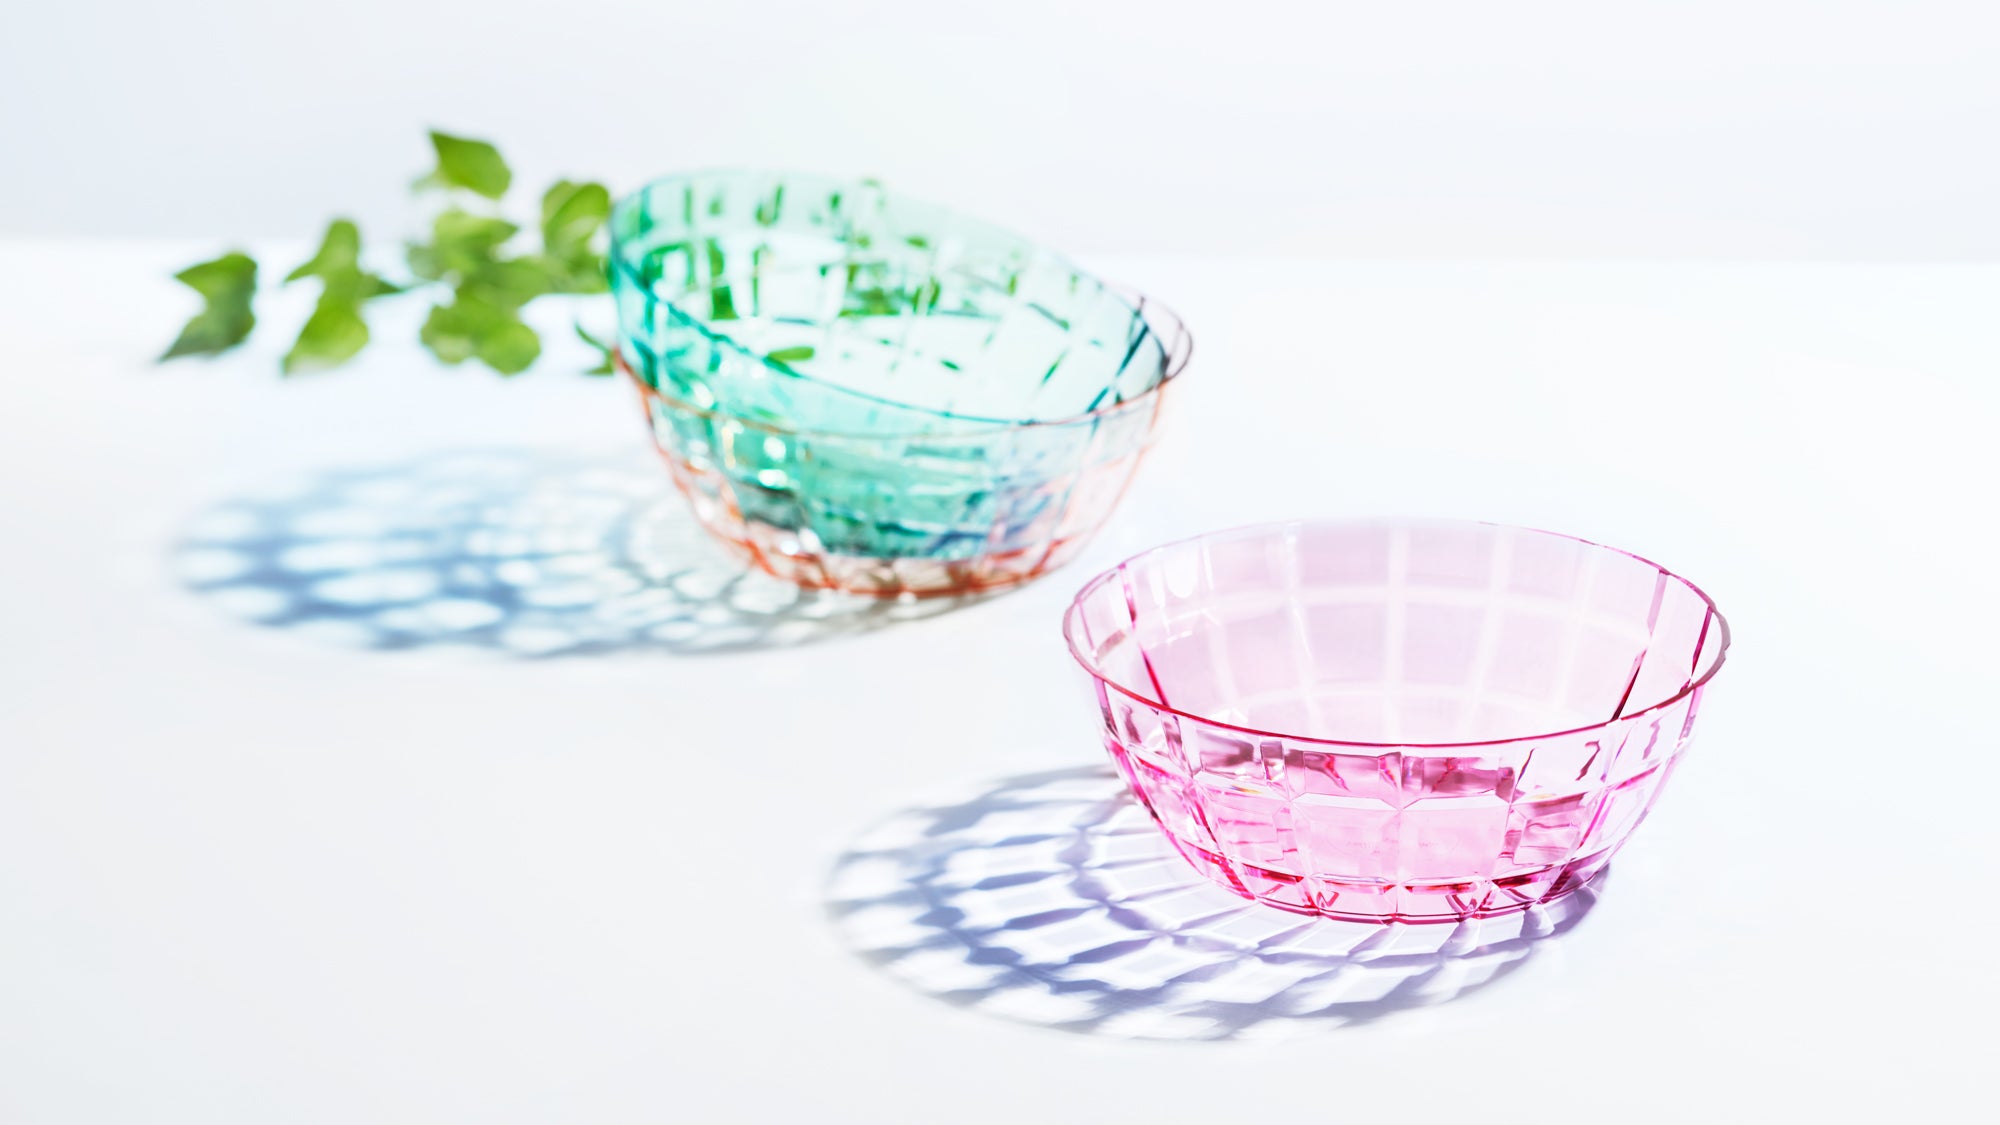 13 oz Unbreakable Premium Bowls - Set of 6 - Tritan Plastic - BPA Free -  SCANDINOVIA - USA